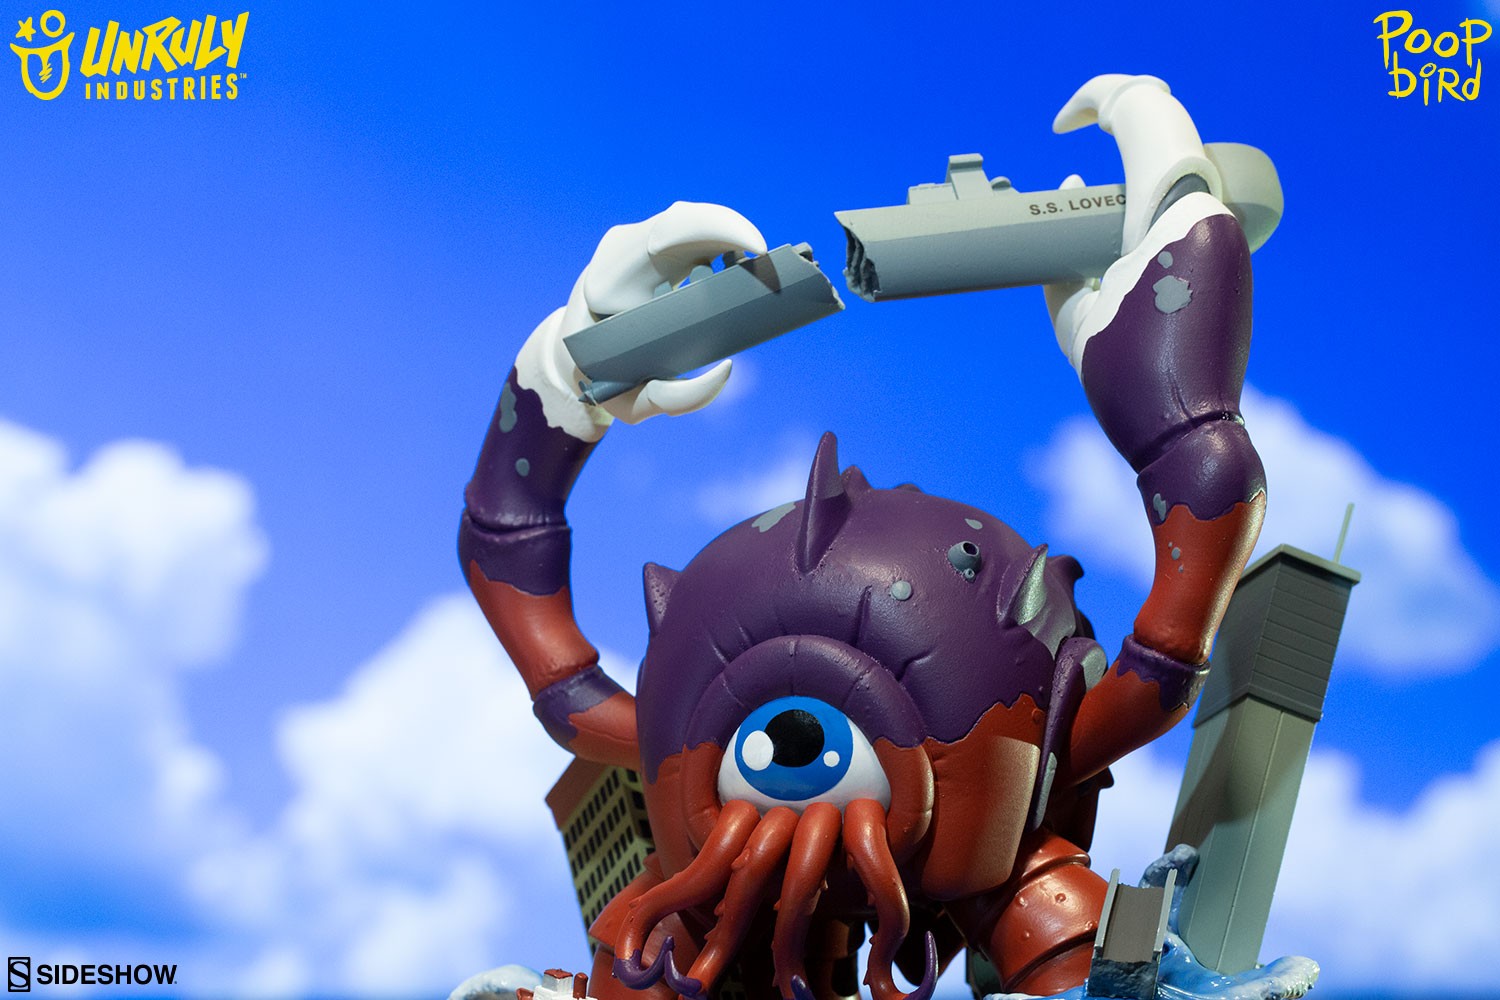 Crabthulu: Terror of the Deep!- Prototype Shown